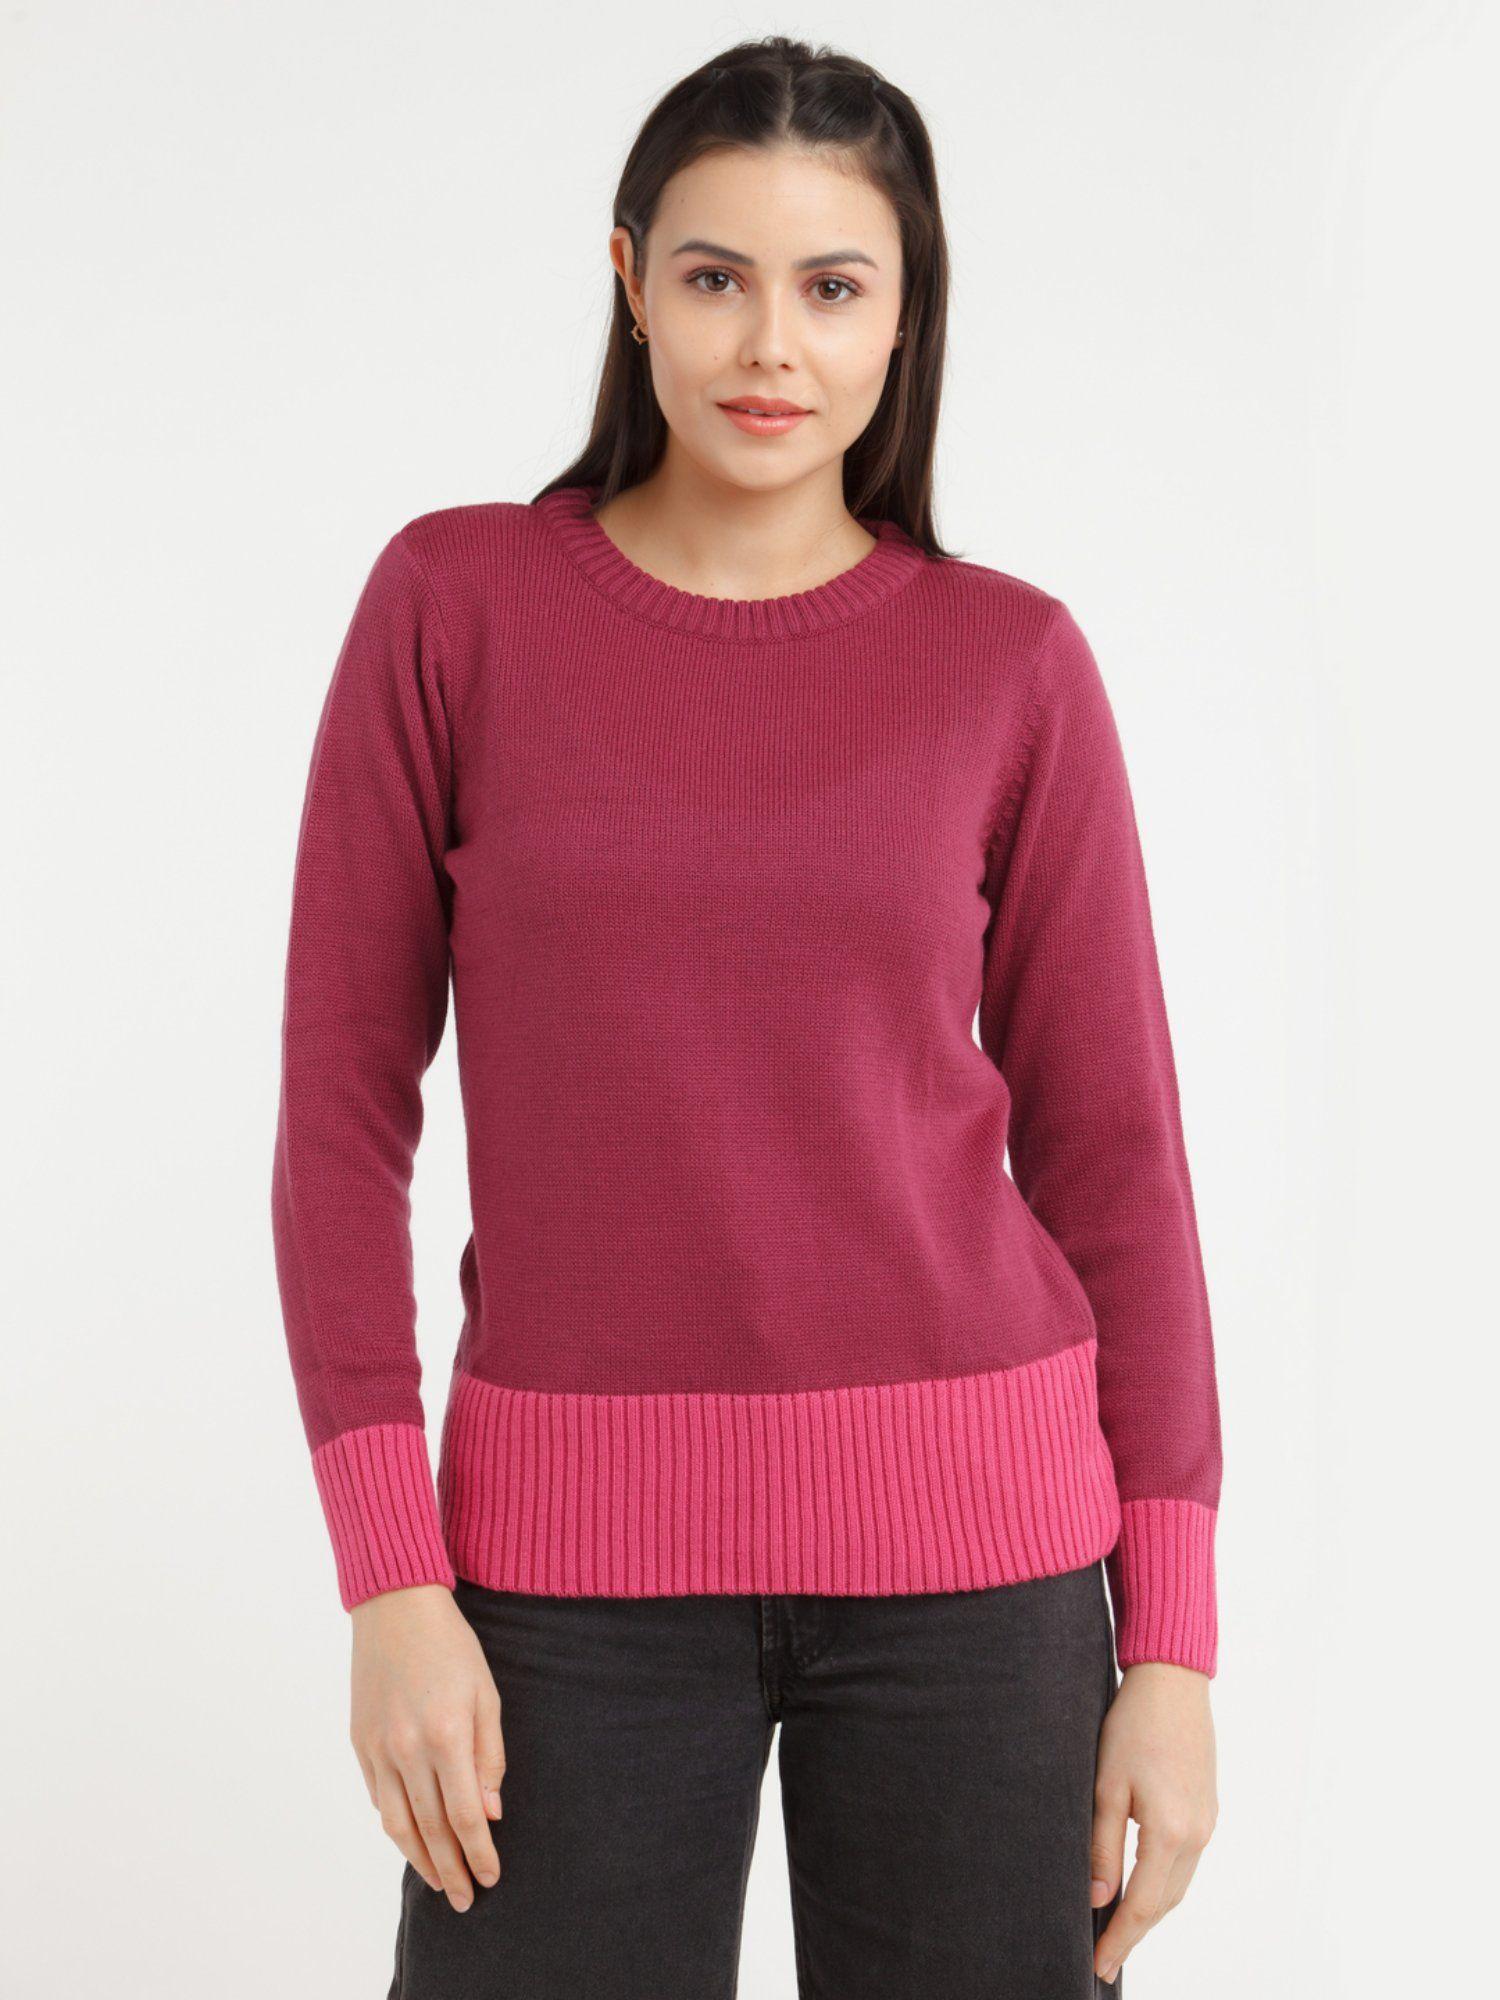 womens purple colorblock sweater